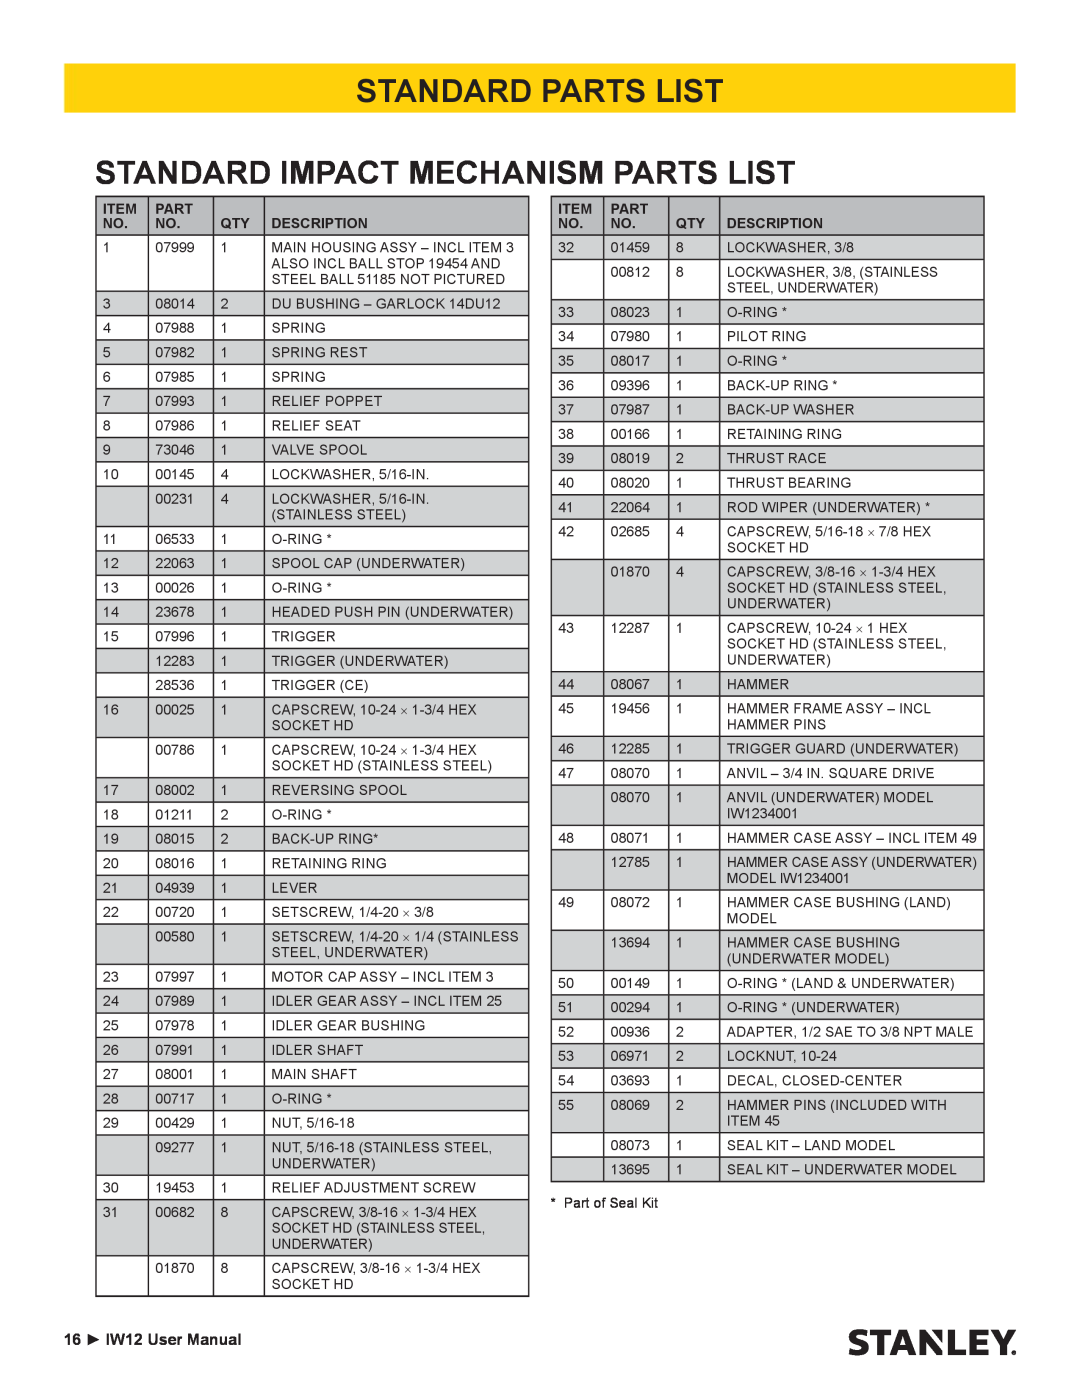 Stanley Black & Decker user manual Standard Parts List Standard Impact Mechanism Parts List, 16 IW12 User Manual 